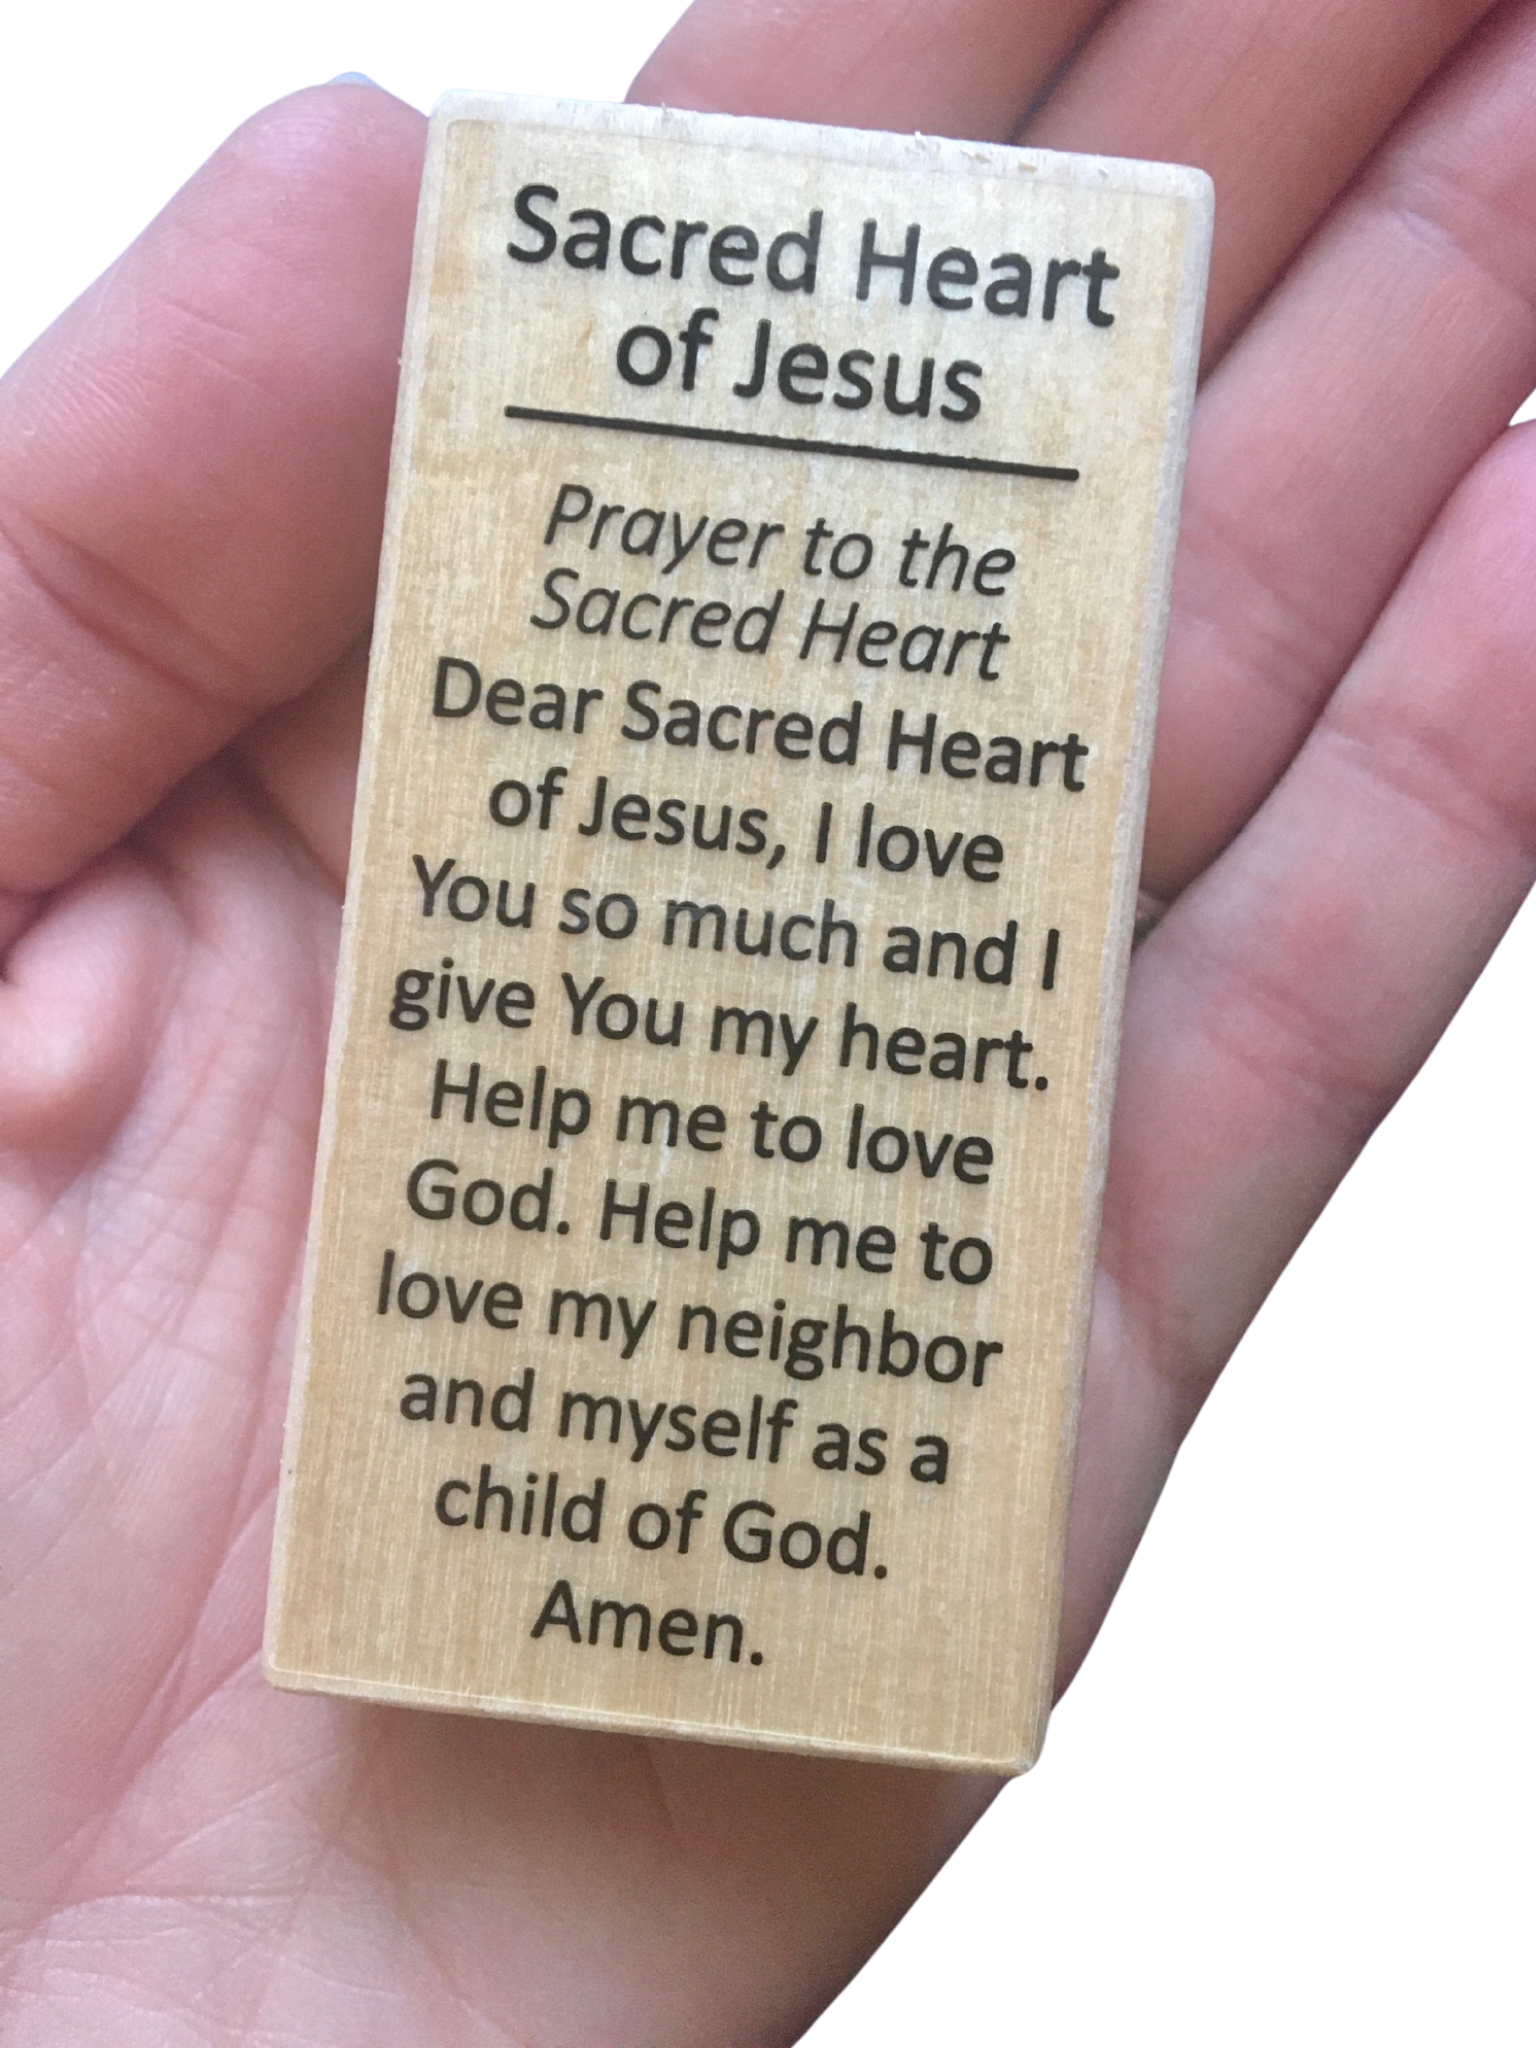 Prayer to the Sacred Heart of Jesus